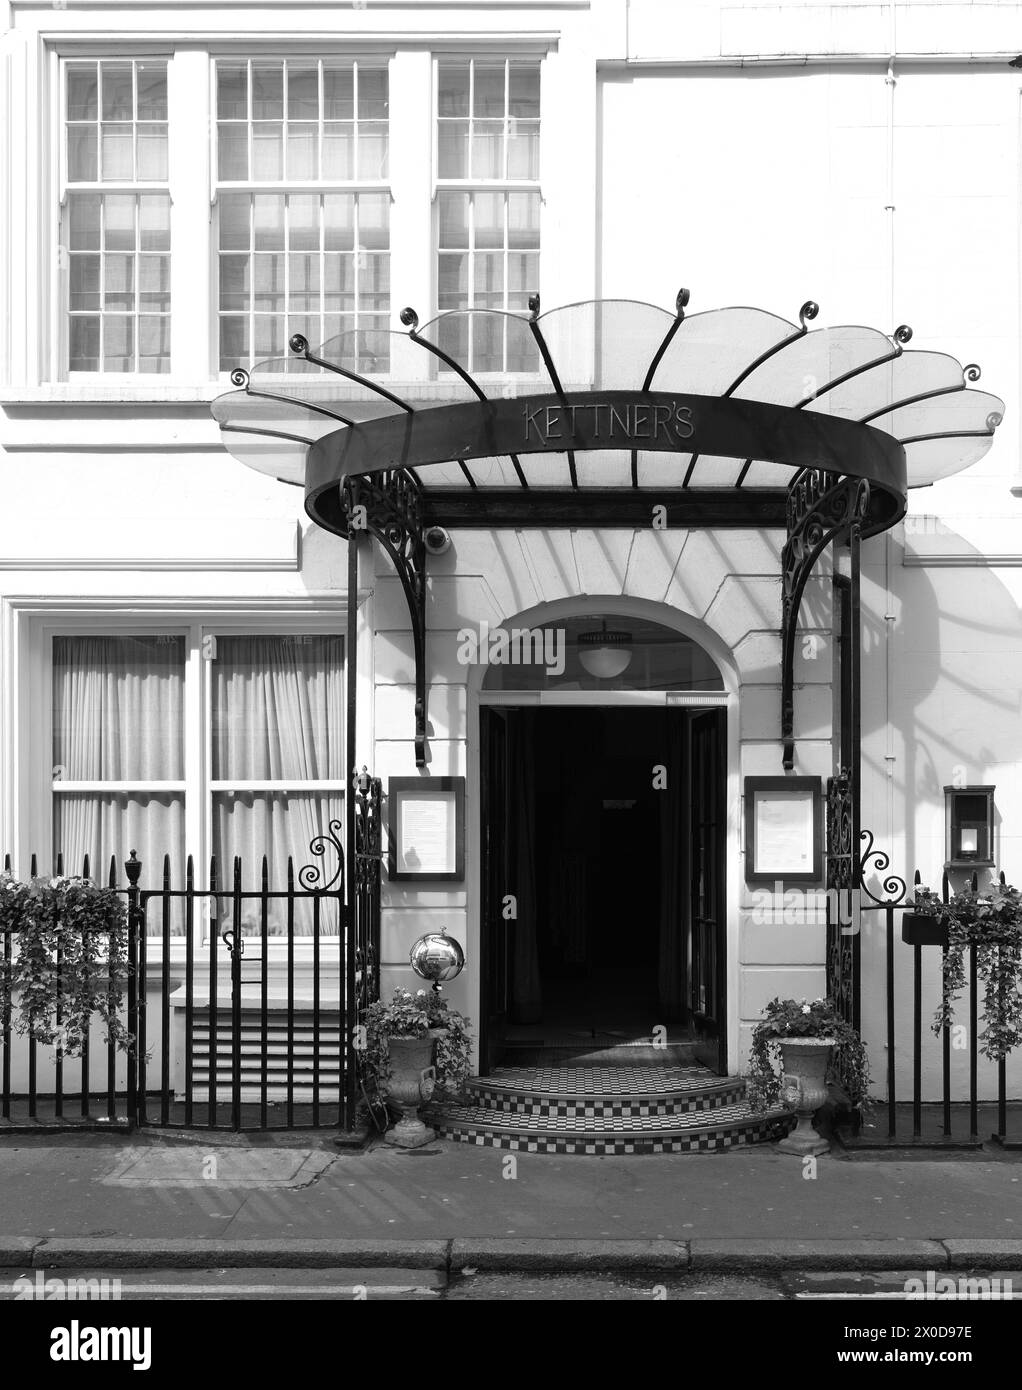 Restaurant Kettner’s Townhouse, bar à champagne et hôtel, Soho, Londres, Angleterre. Banque D'Images